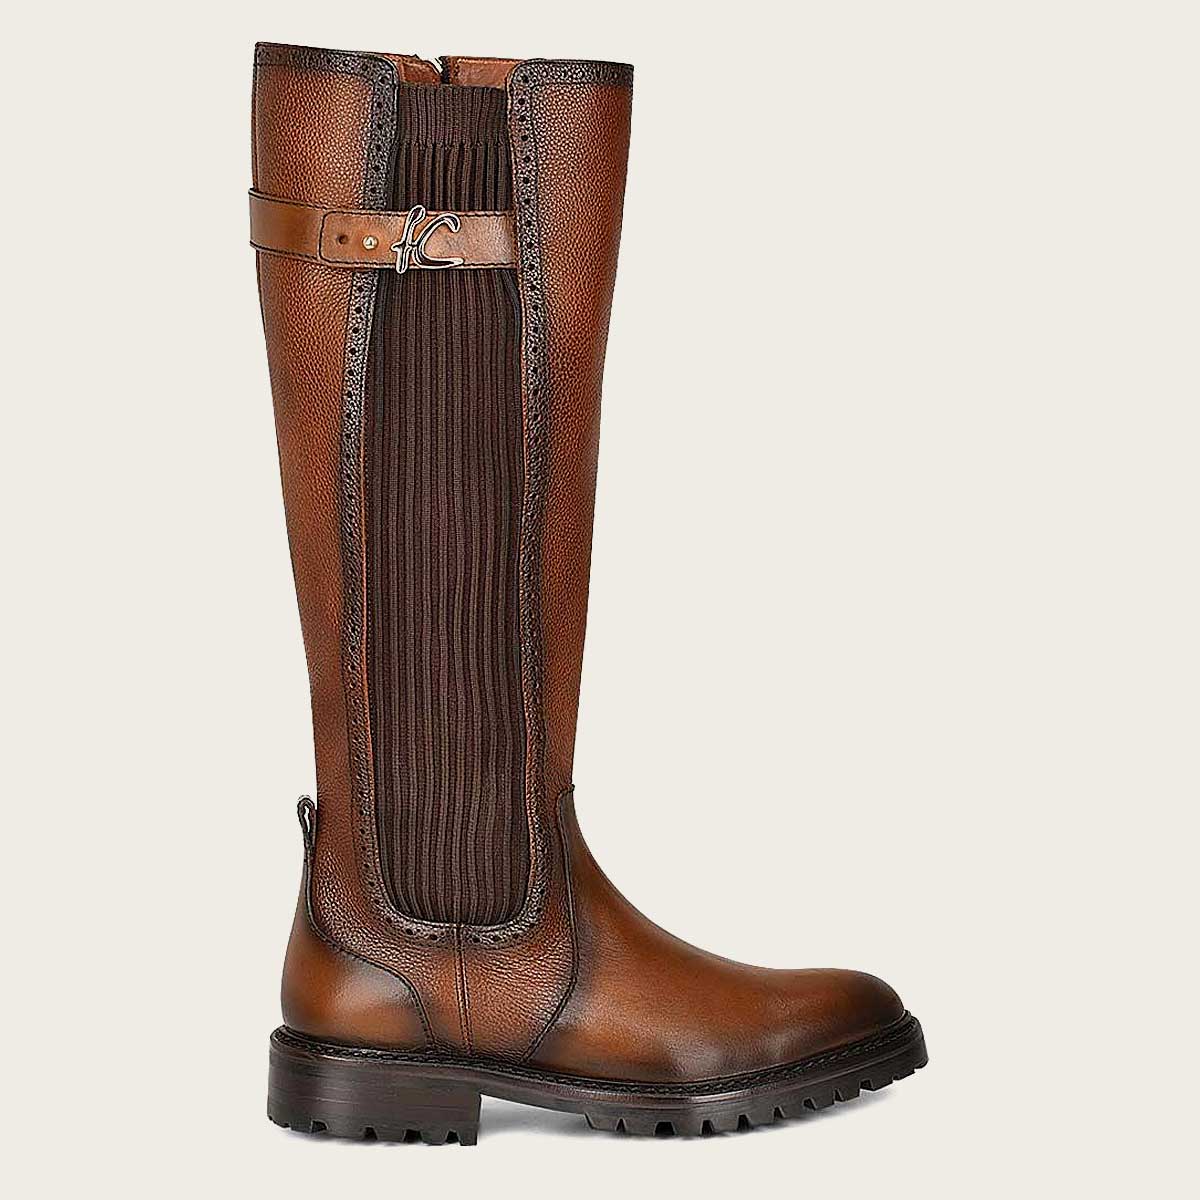 High boot honey bovine leather boot